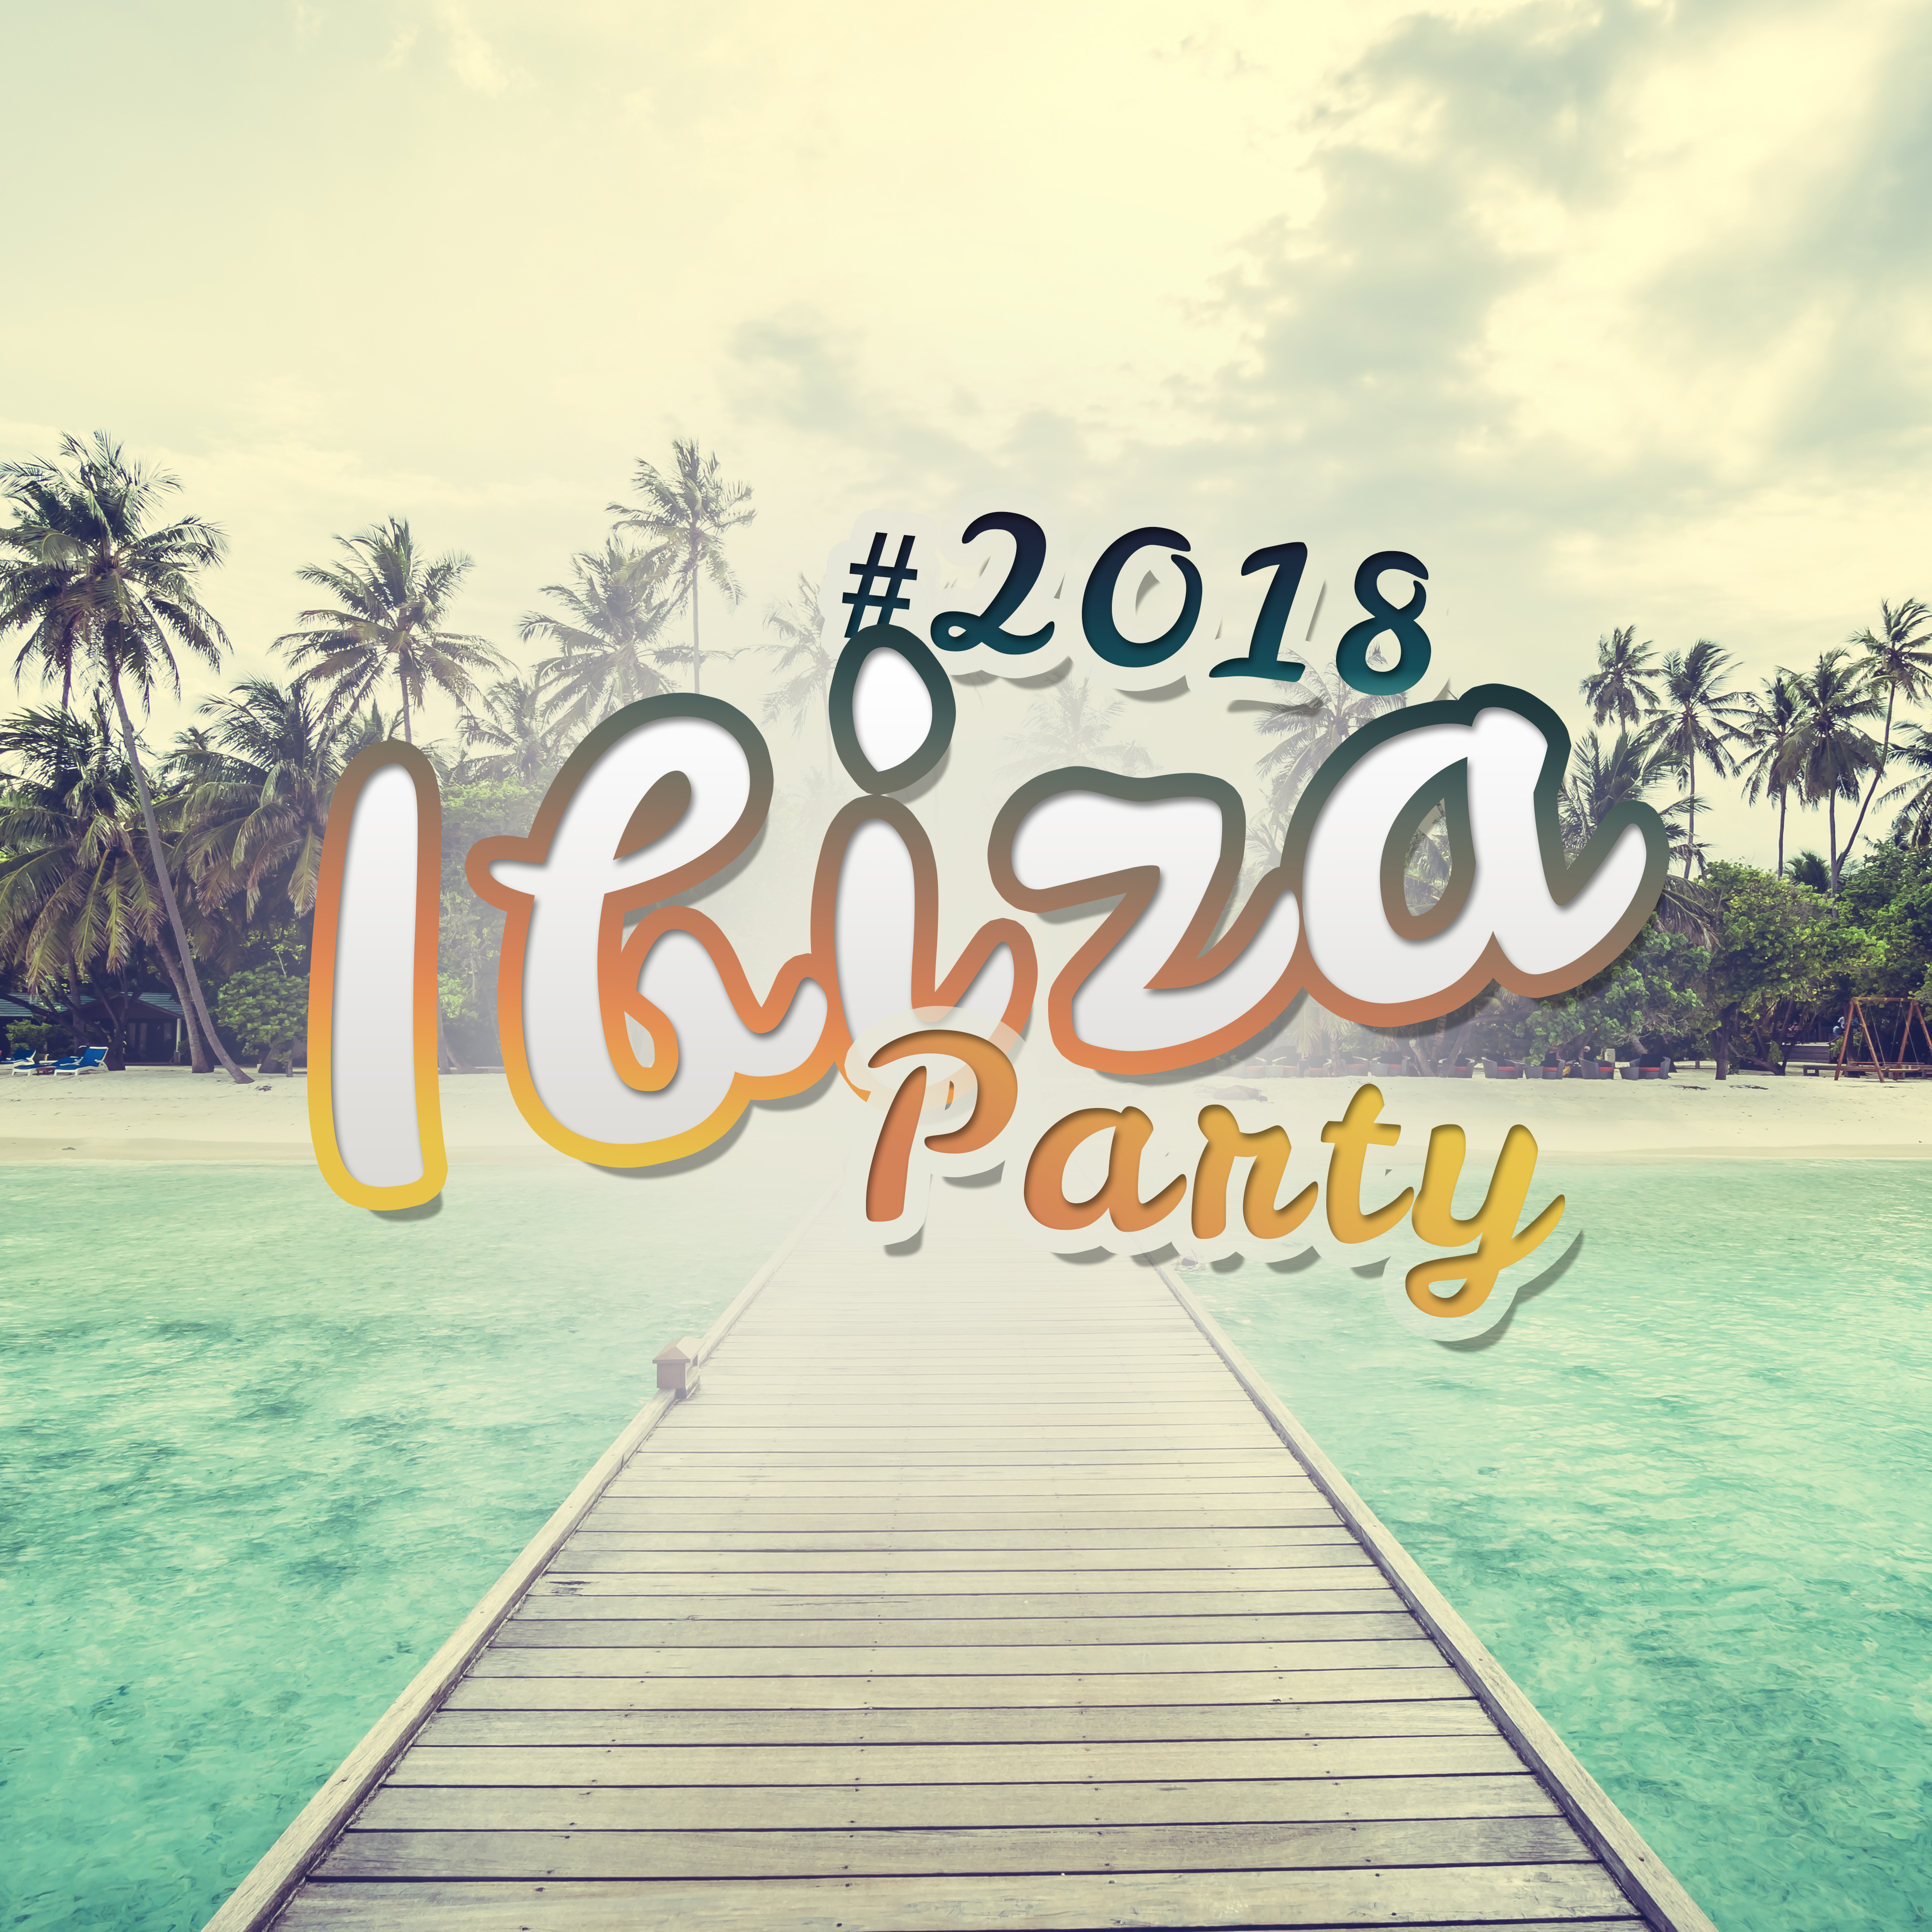 #2018 Ibiza Party